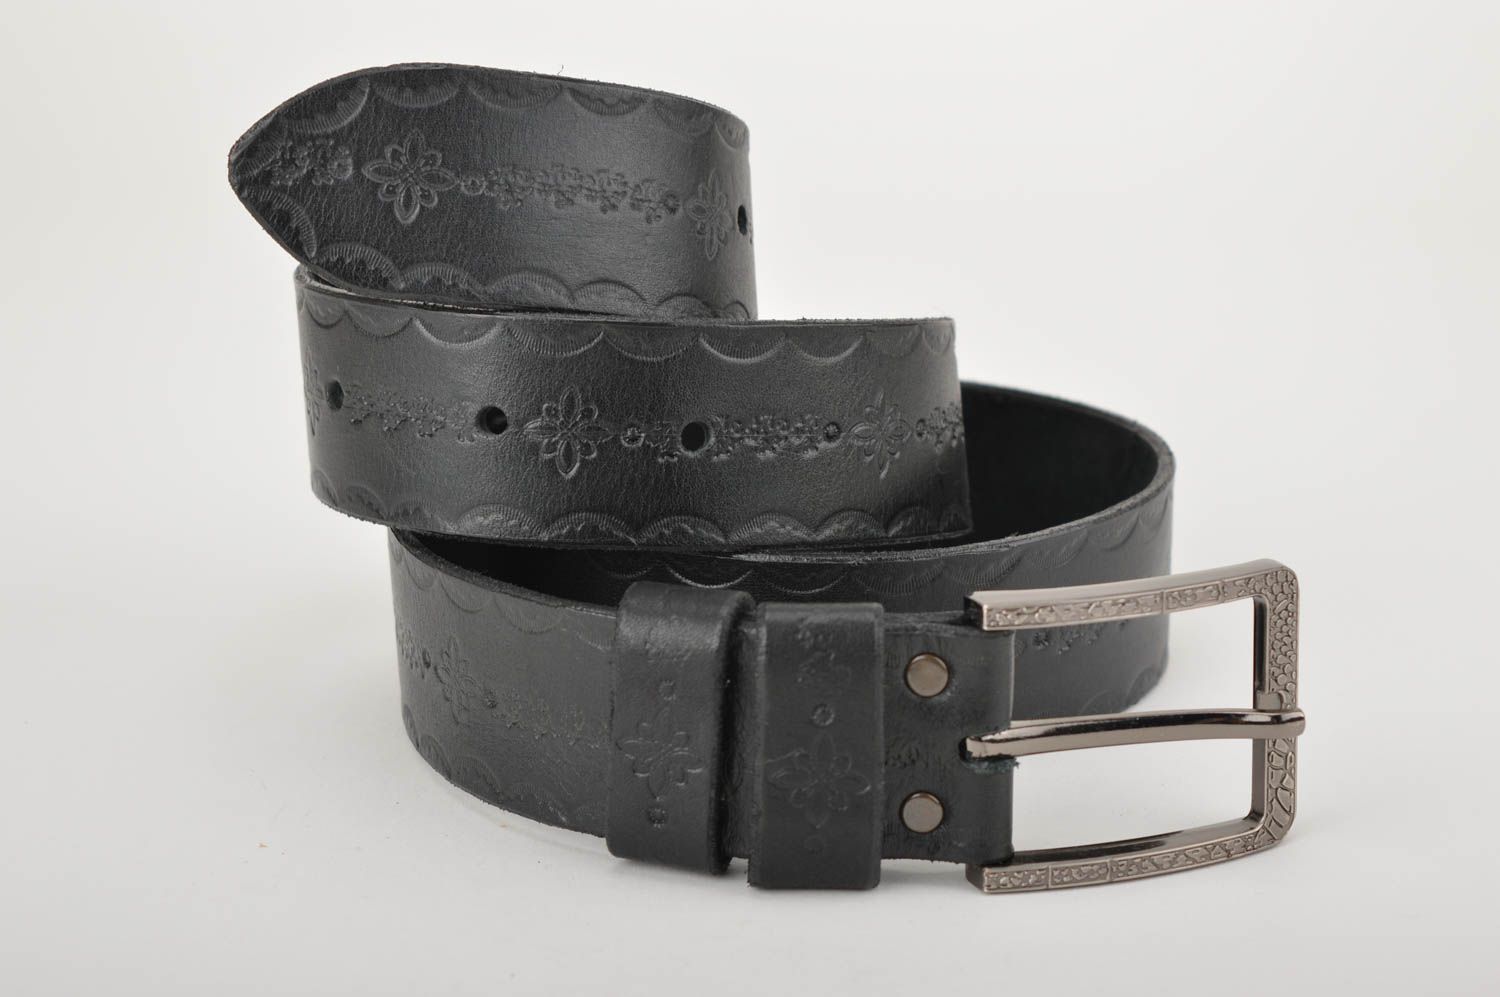 Stylish handmade leather belt stylish belts for men gentlemen only gift ideas photo 5